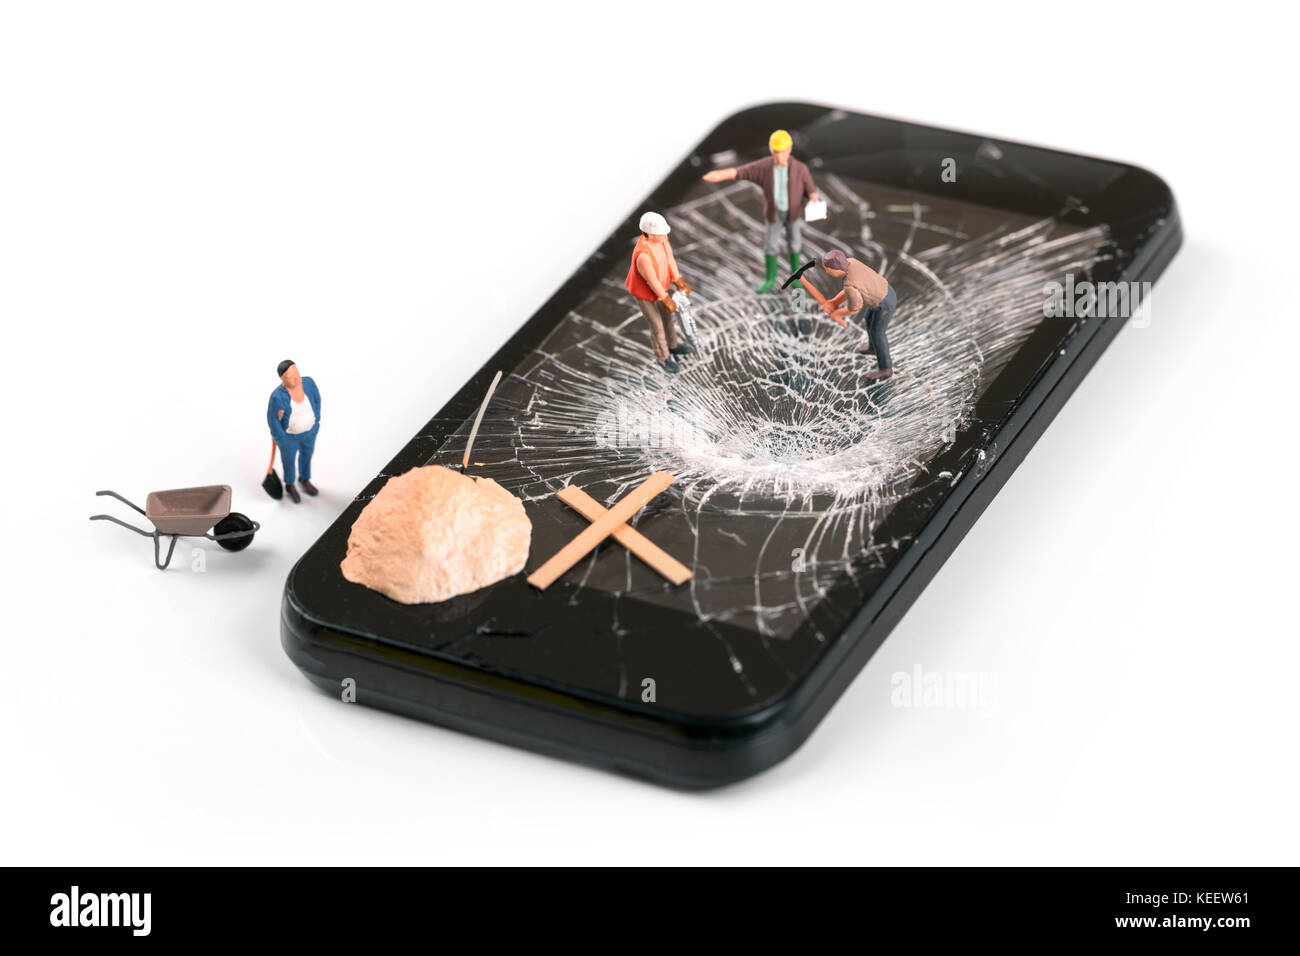 phone repair service concept - construction workers repairing smartphone broken screen Stock Photo